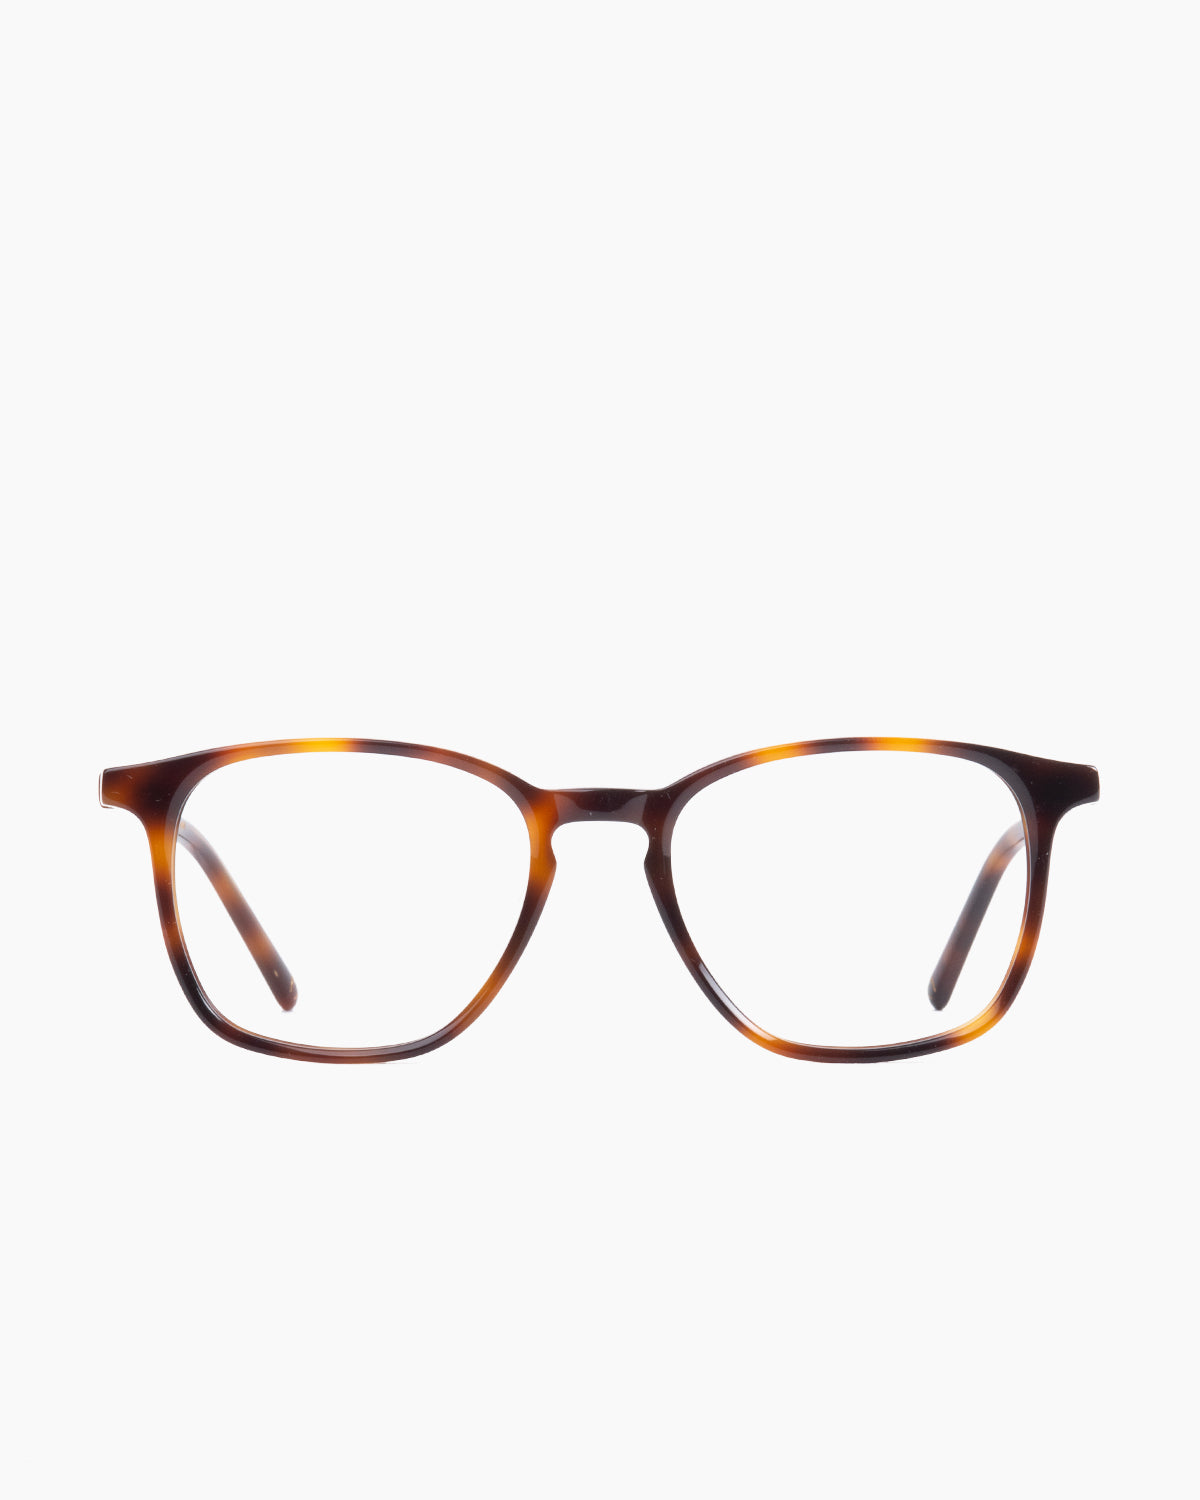 Spectacleeyeworks - J-F - 505 | Bar à lunettes:  Marie-Sophie Dion